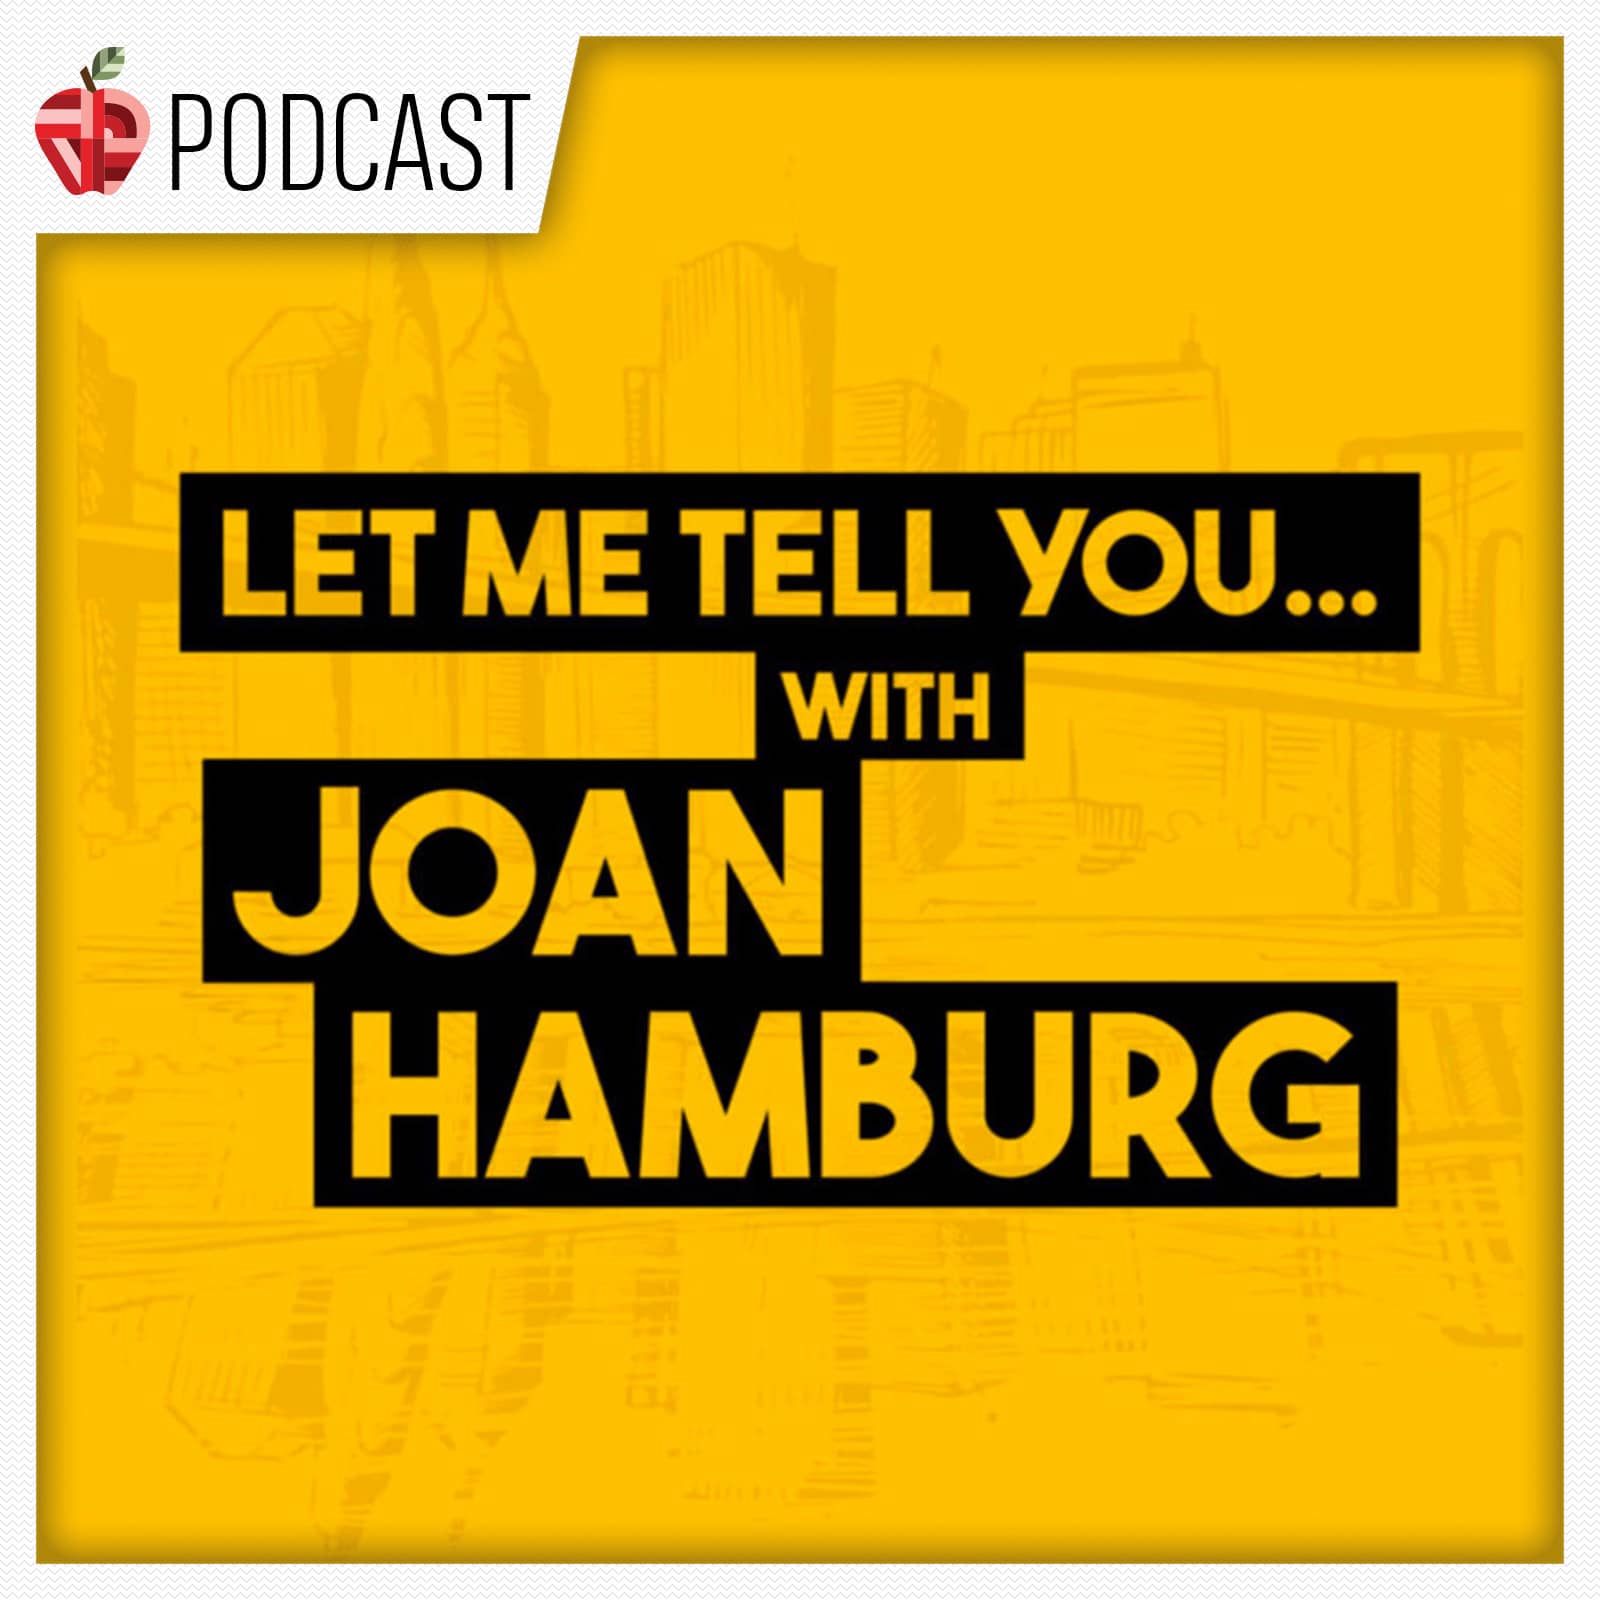 joan-hamburg-let-me-tell-you-podcast-podcast-logo-19